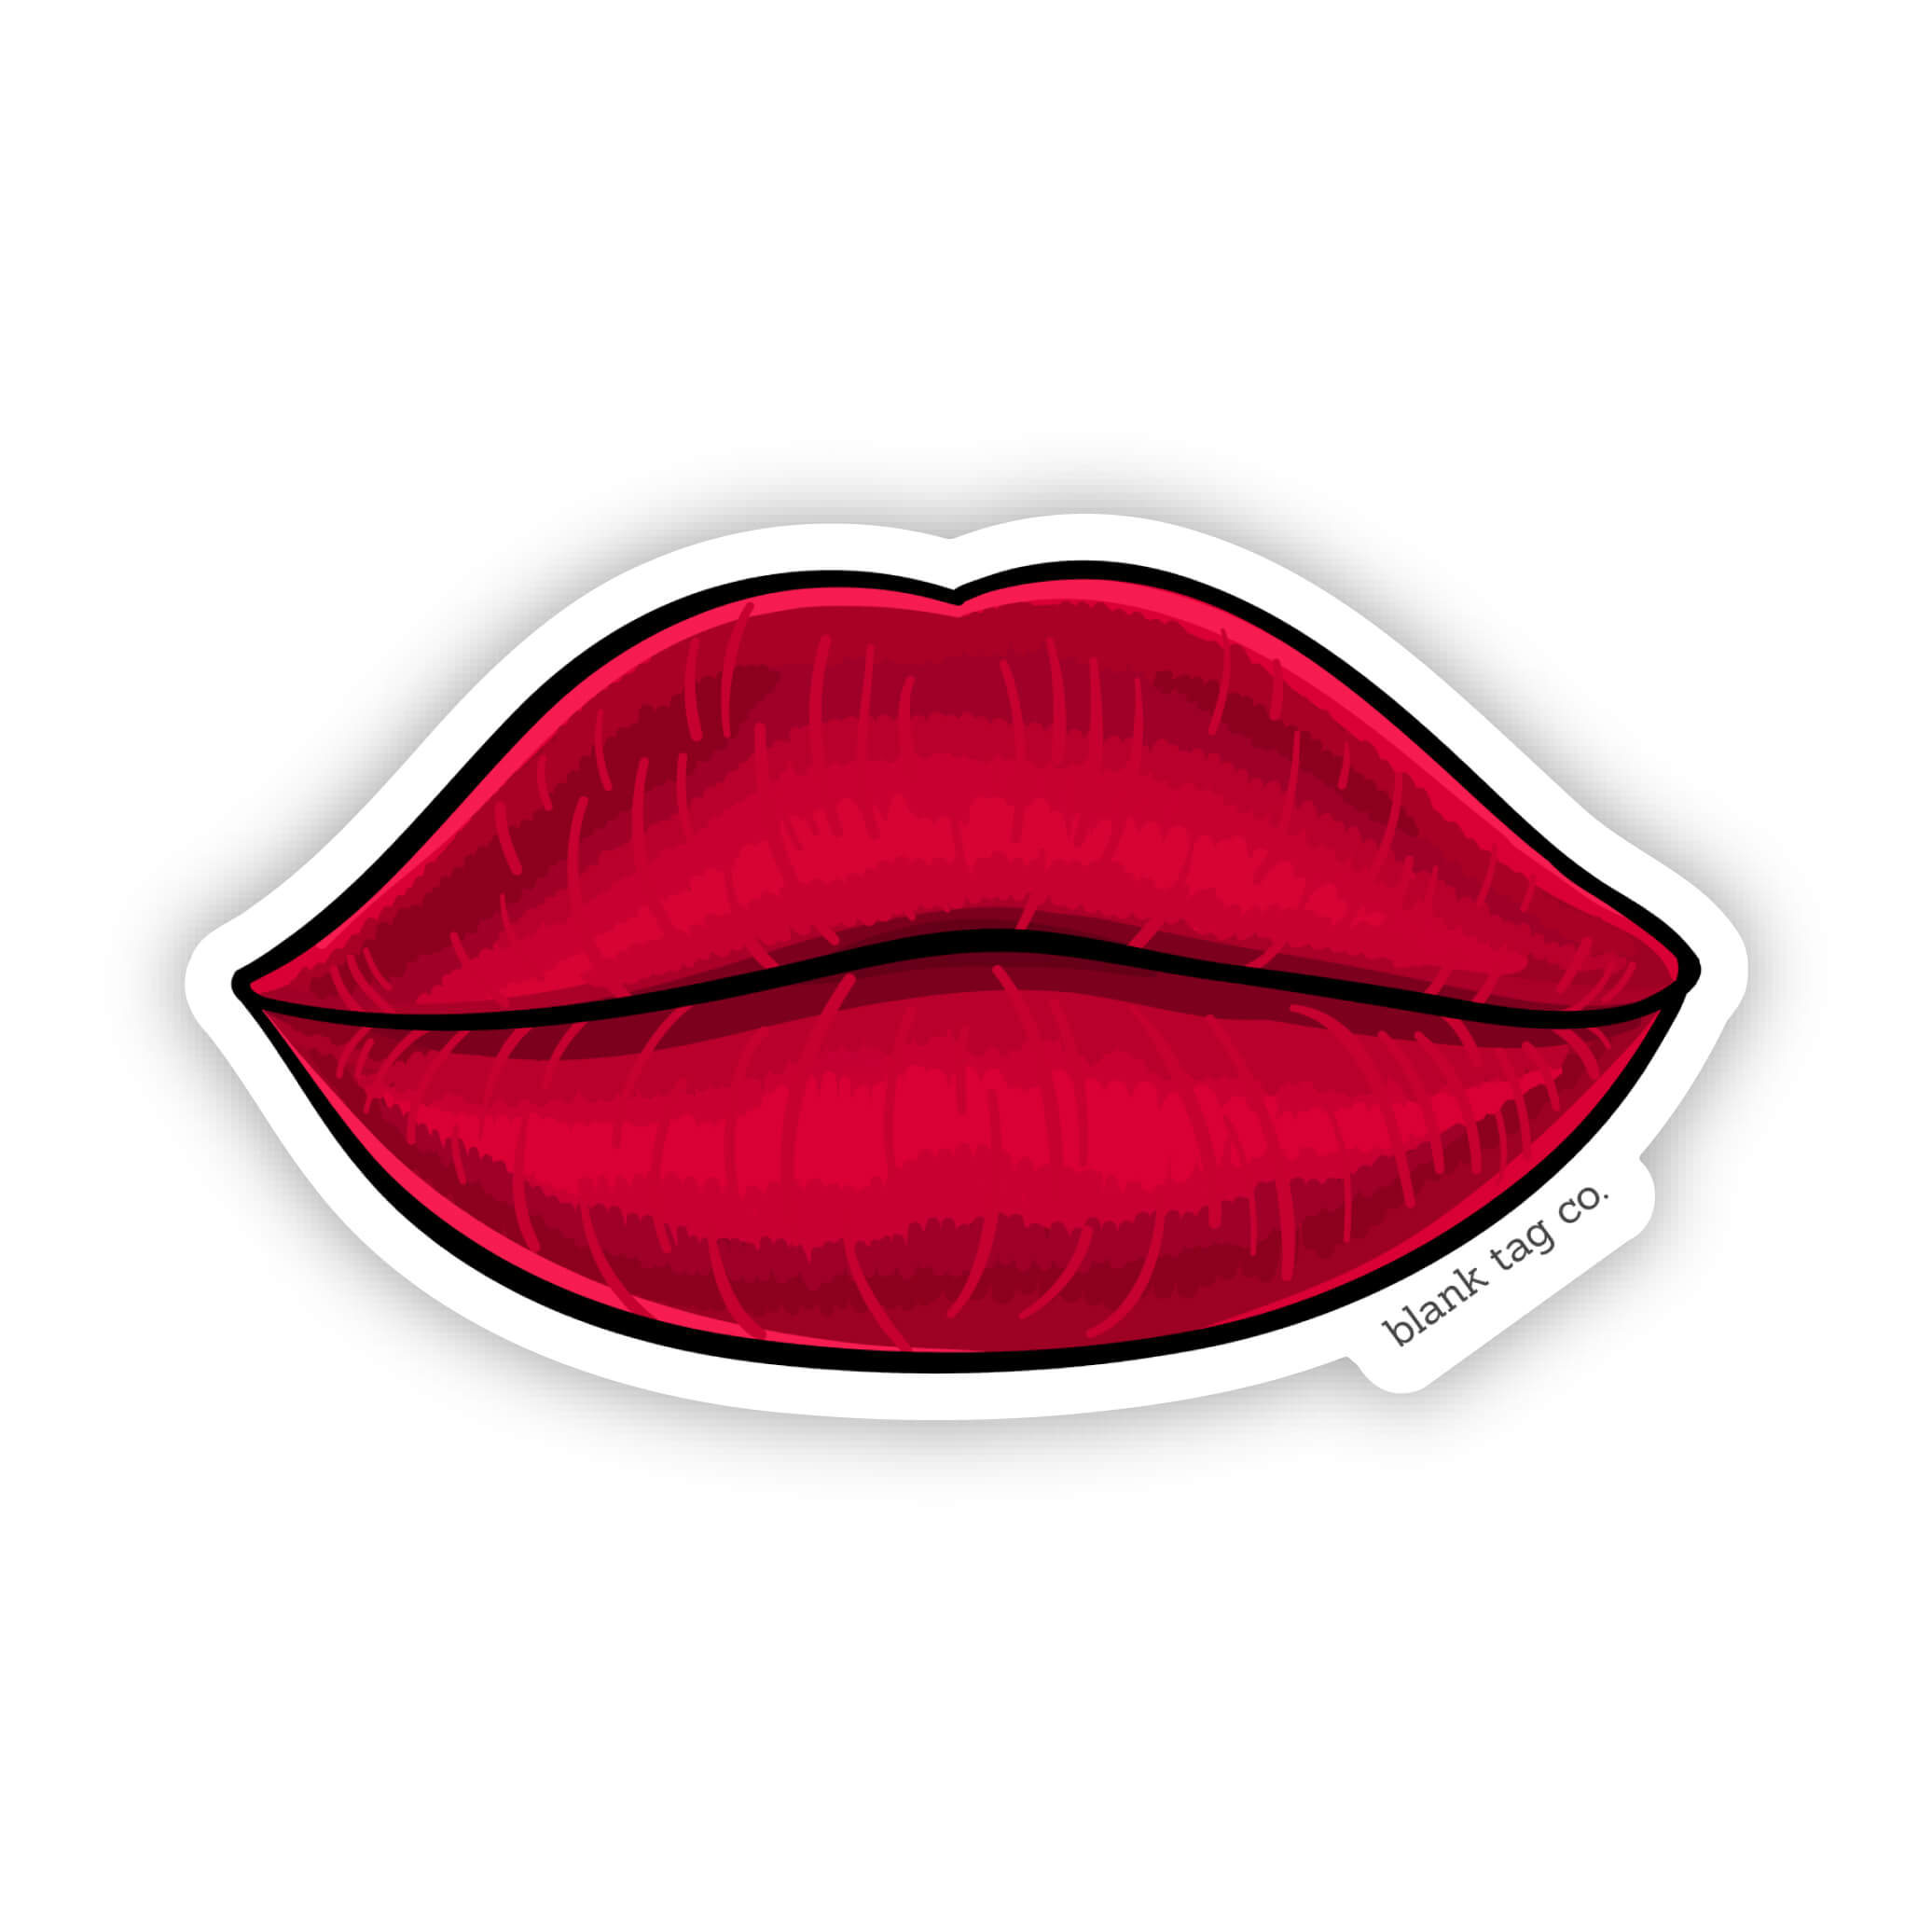 The Lips Sticker